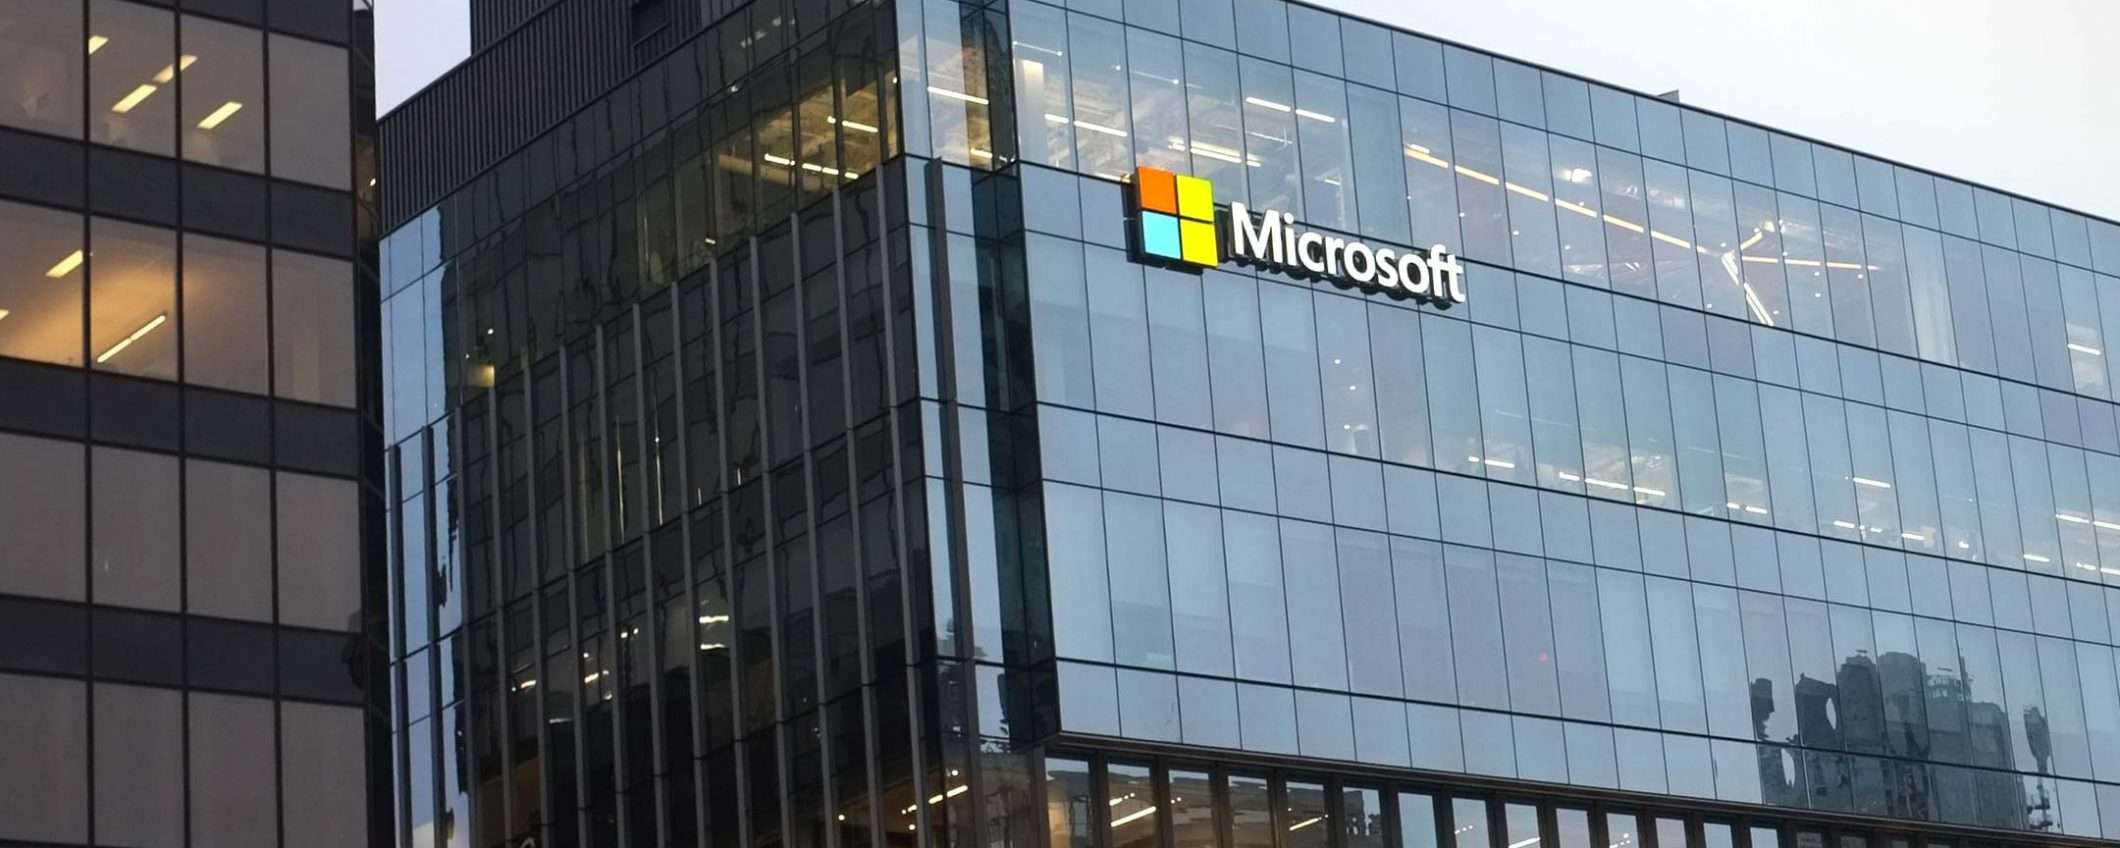 1500 dollari di extra per i dipendenti Microsoft